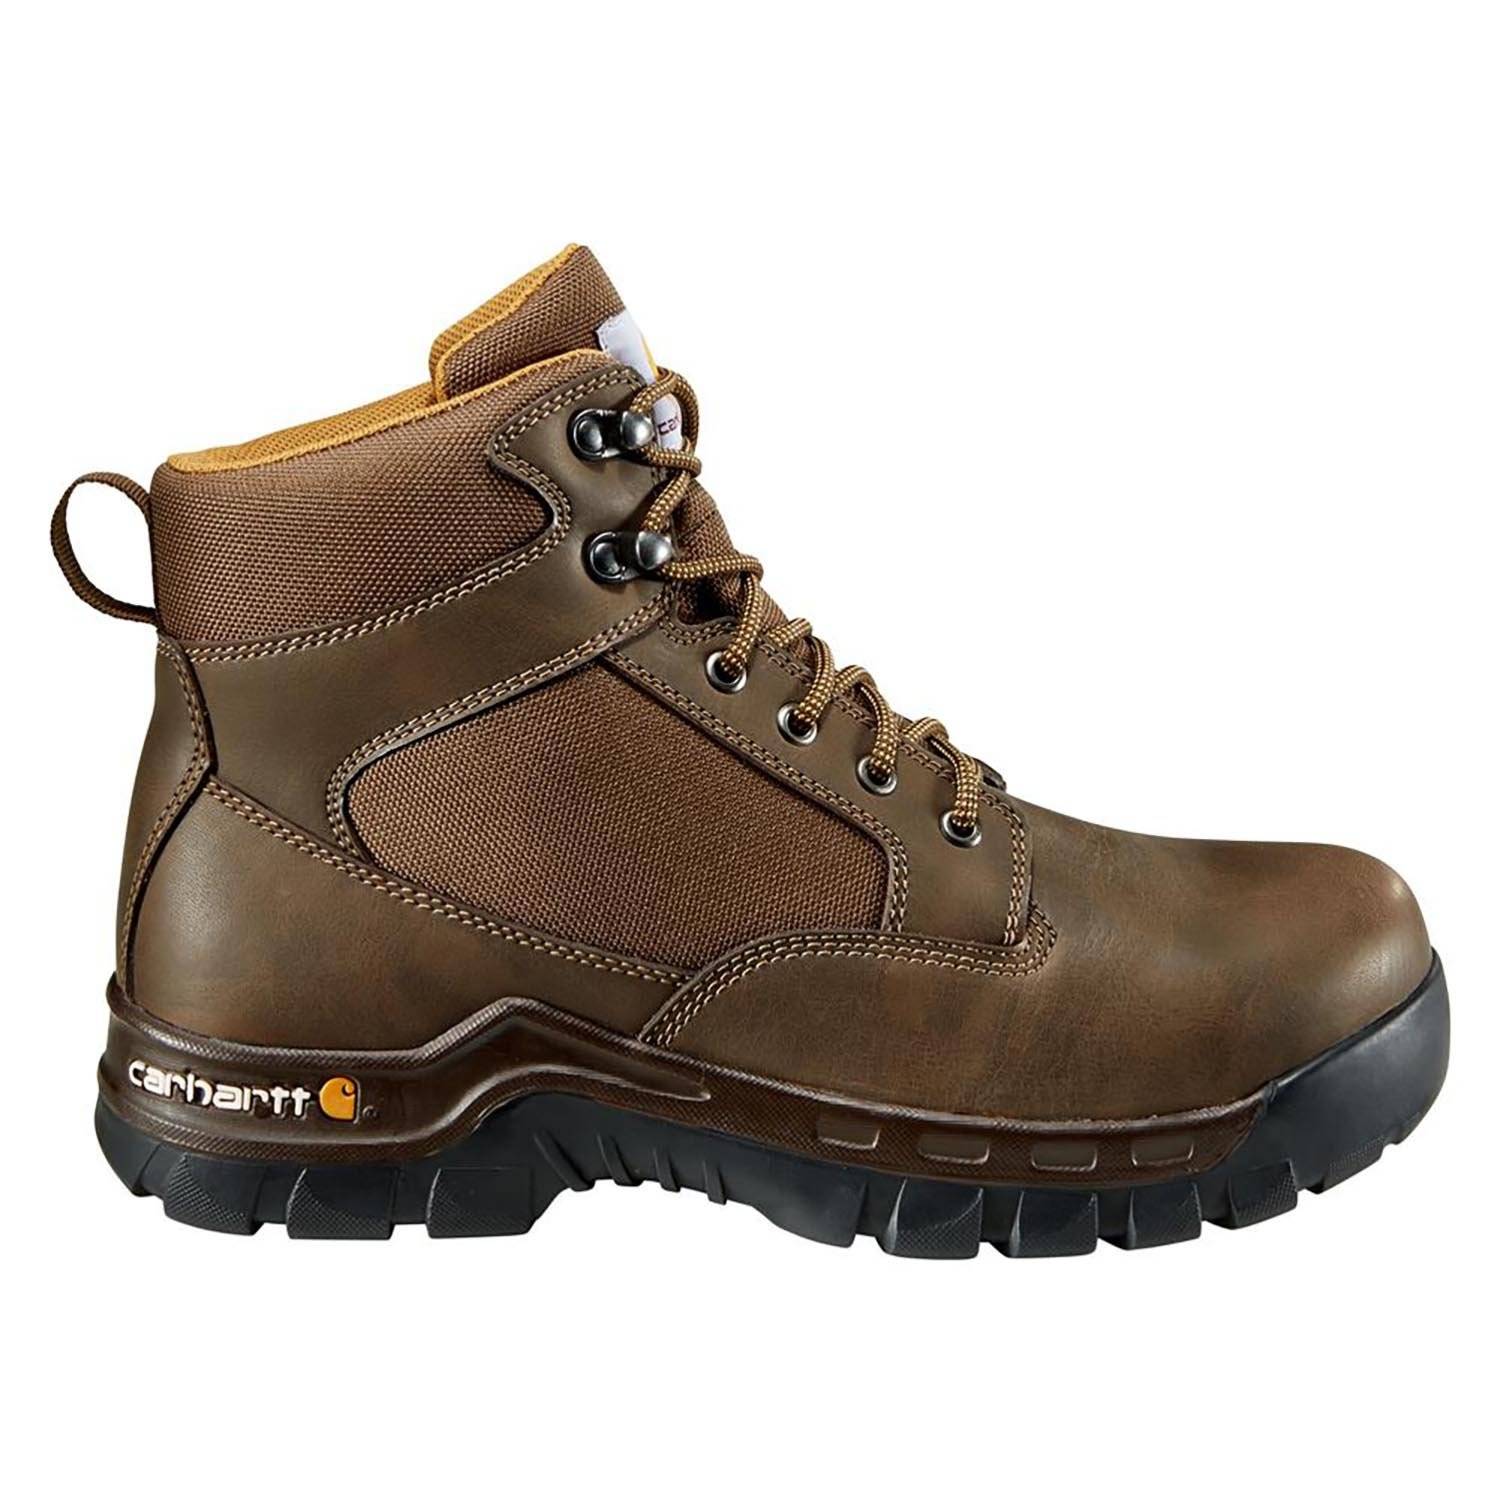 Carhartt 6" Men's Rugged Flex Steel Toe Work Boots